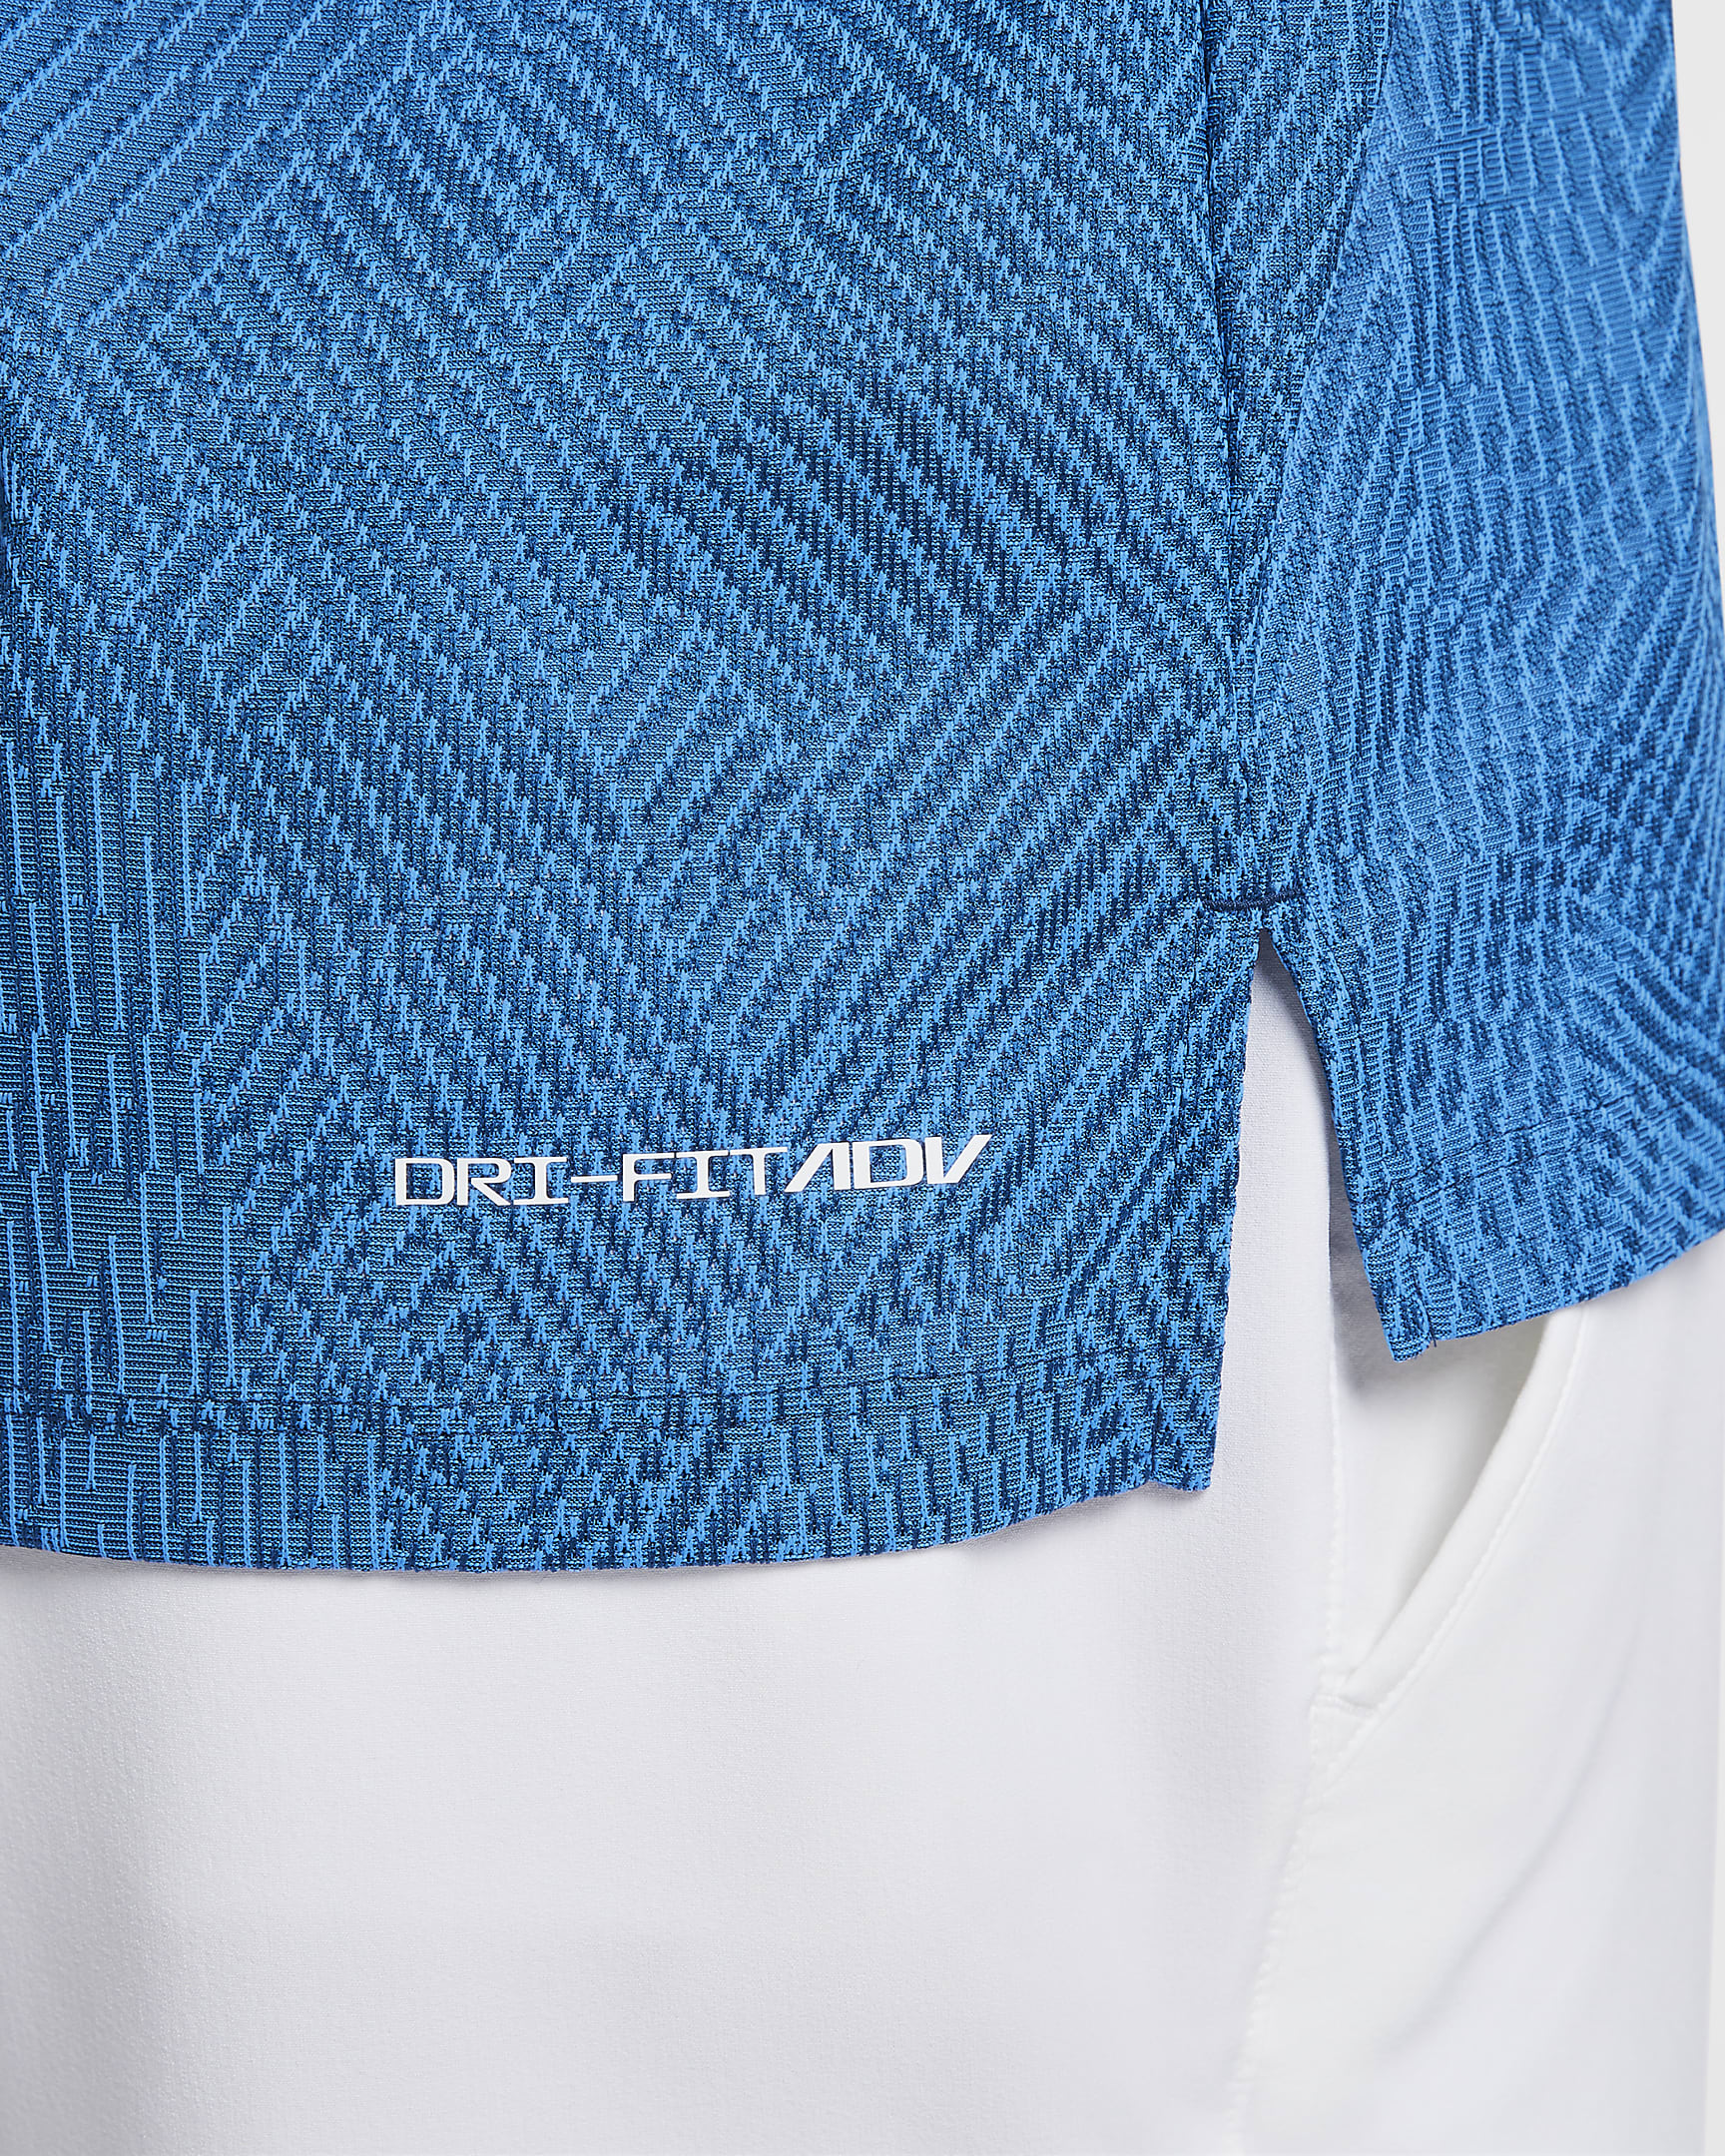 Nike Tour Men's Dri-FIT ADV Golf Polo - Light Photo Blue/Court Blue/White